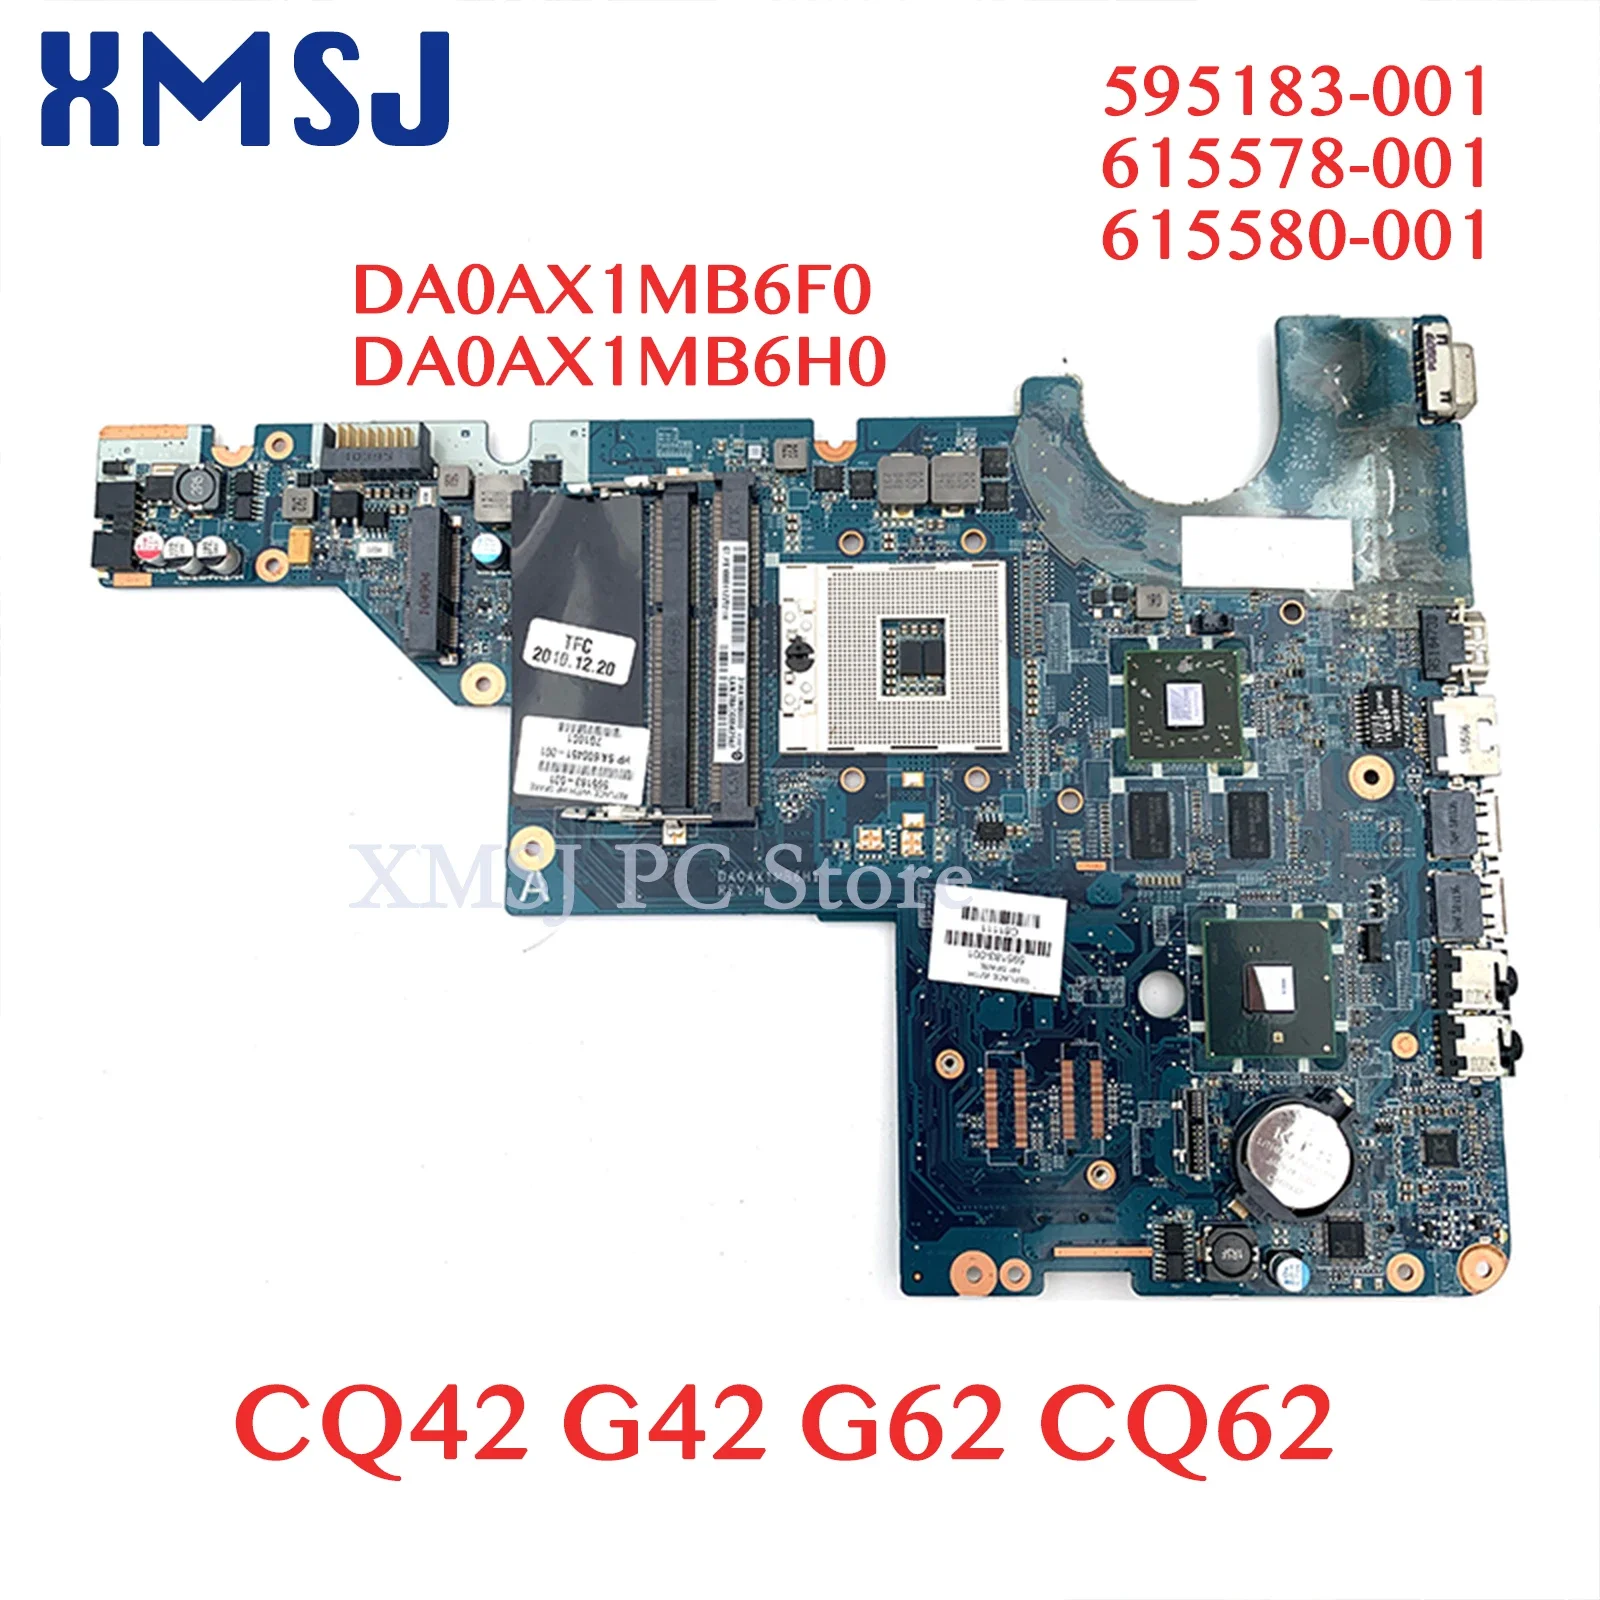 

XMSJ For HP CQ42 G42 G62 CQ62 Laptop Motherboard DA0AX1MB6F0 DA0AX1MB6H0 595183-001 615578-001 615580-001 HM55 DDR3 Ati GPU